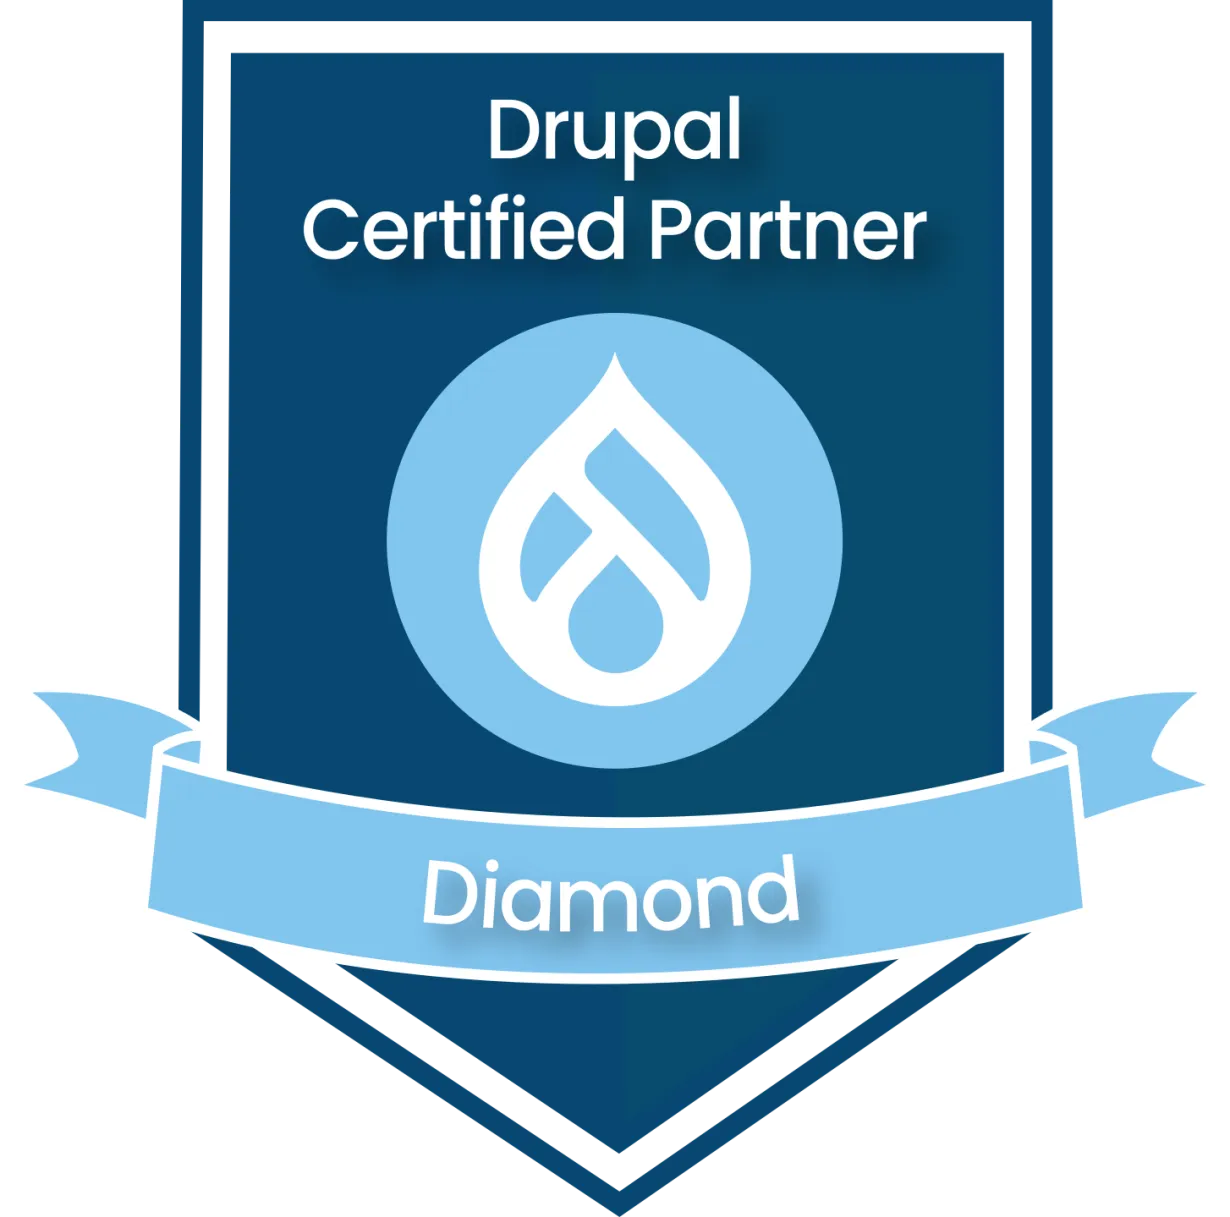 Drupal Association - Certified Partner - Diamond